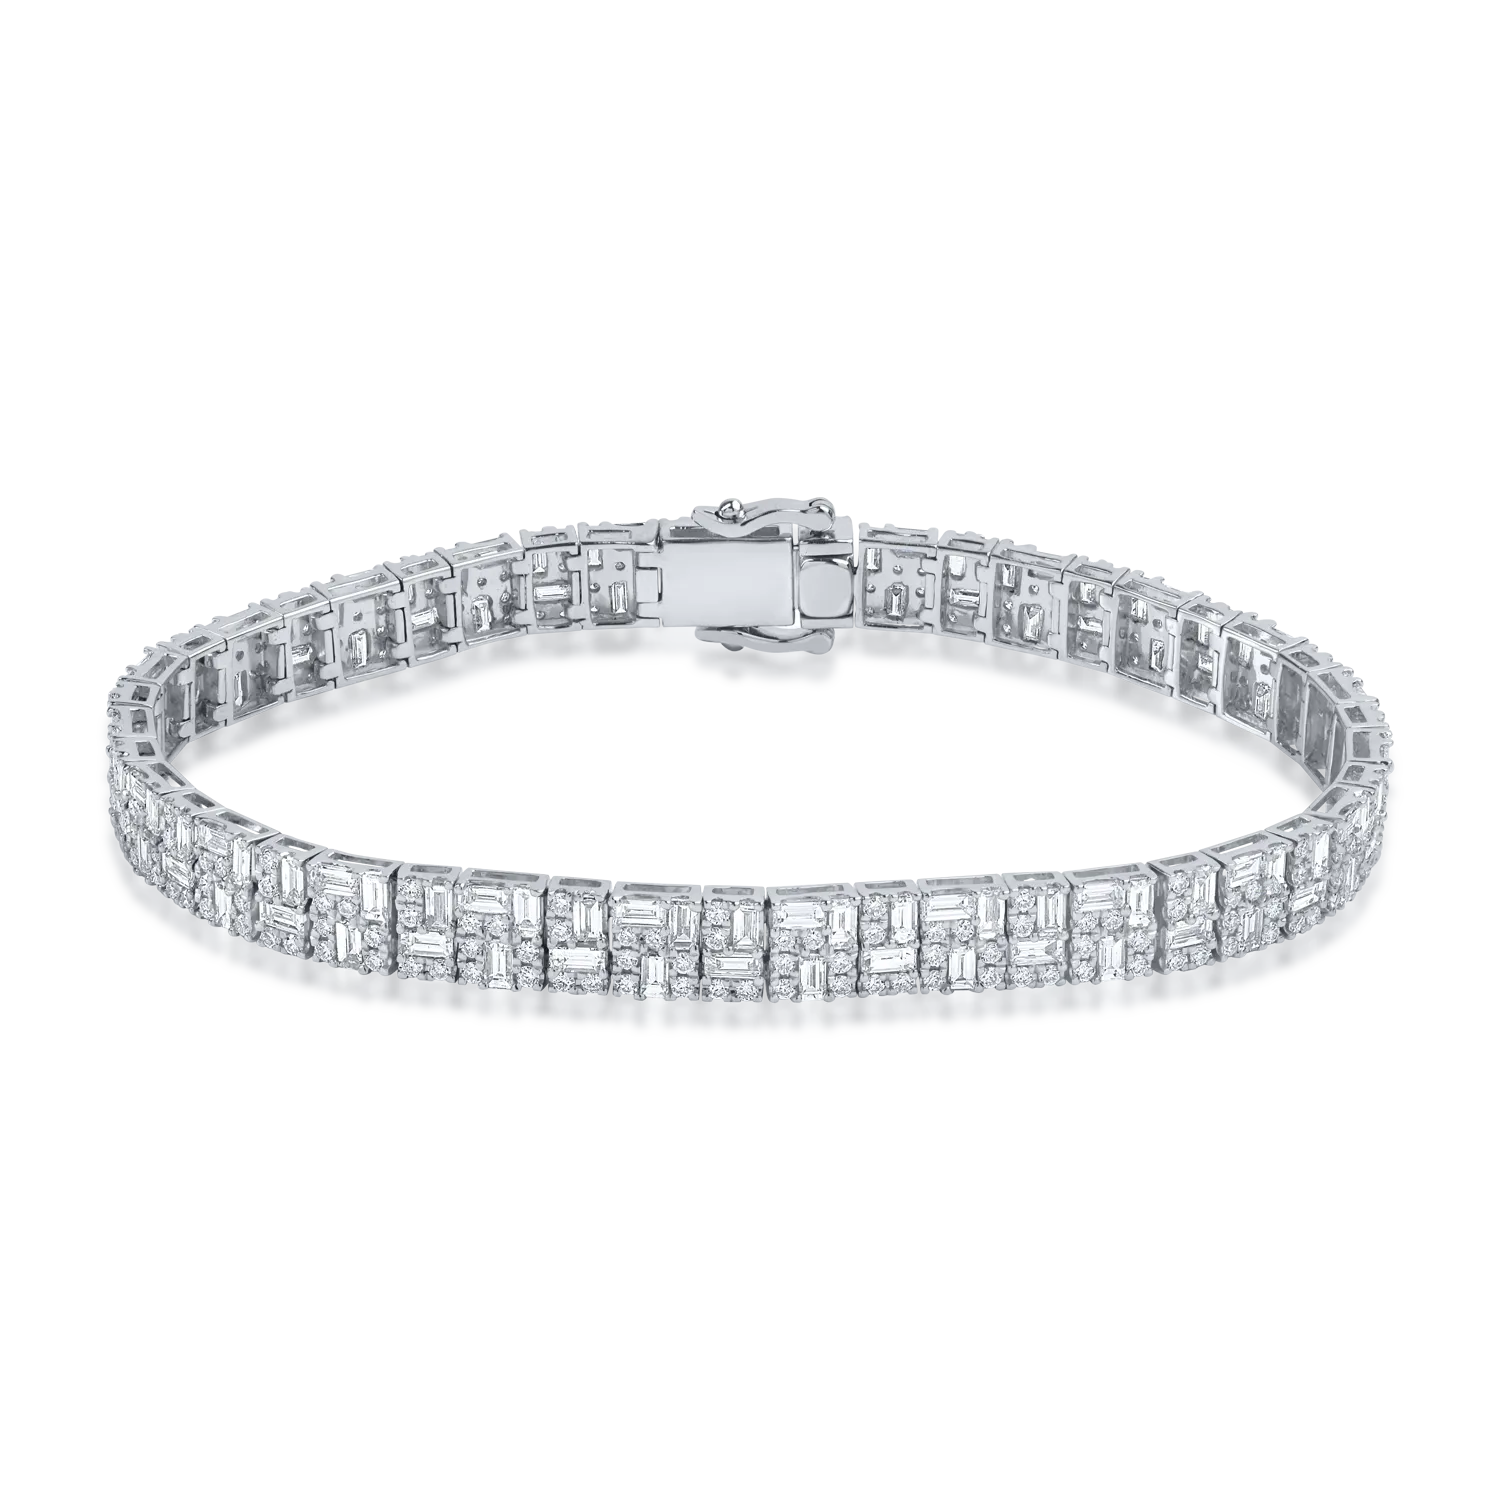 White gold tennis bracelet with 6.65ct diamonds